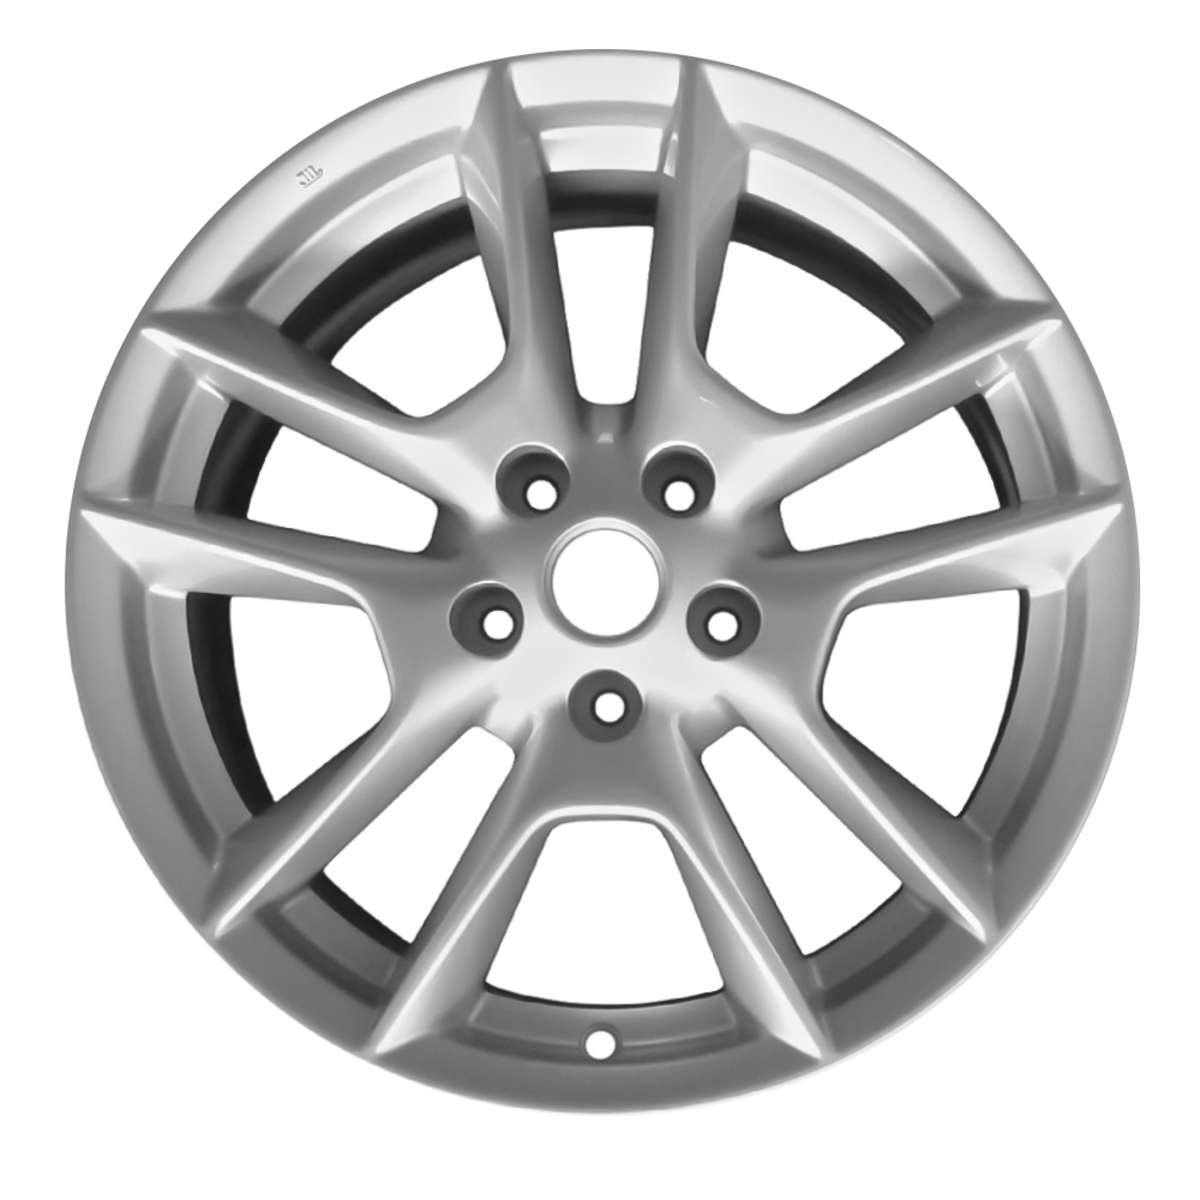 2014 Nissan Maxima New 18" Replacement Wheel Rim RW62511S